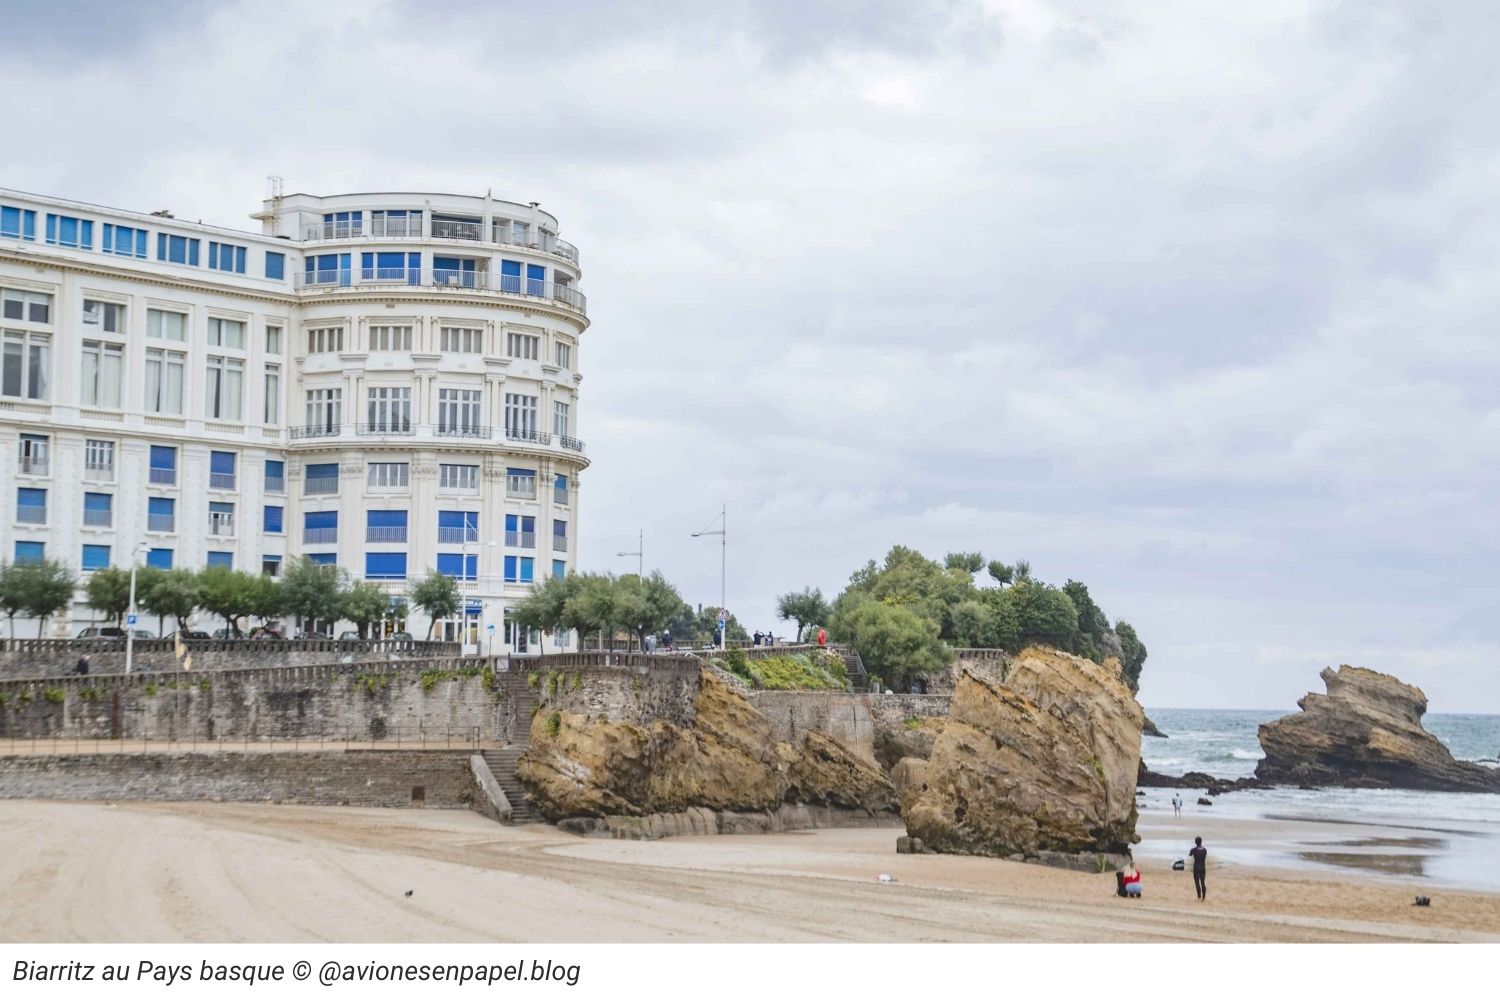 10. Biarritz au Pays basque ©avionesenpapel.blog